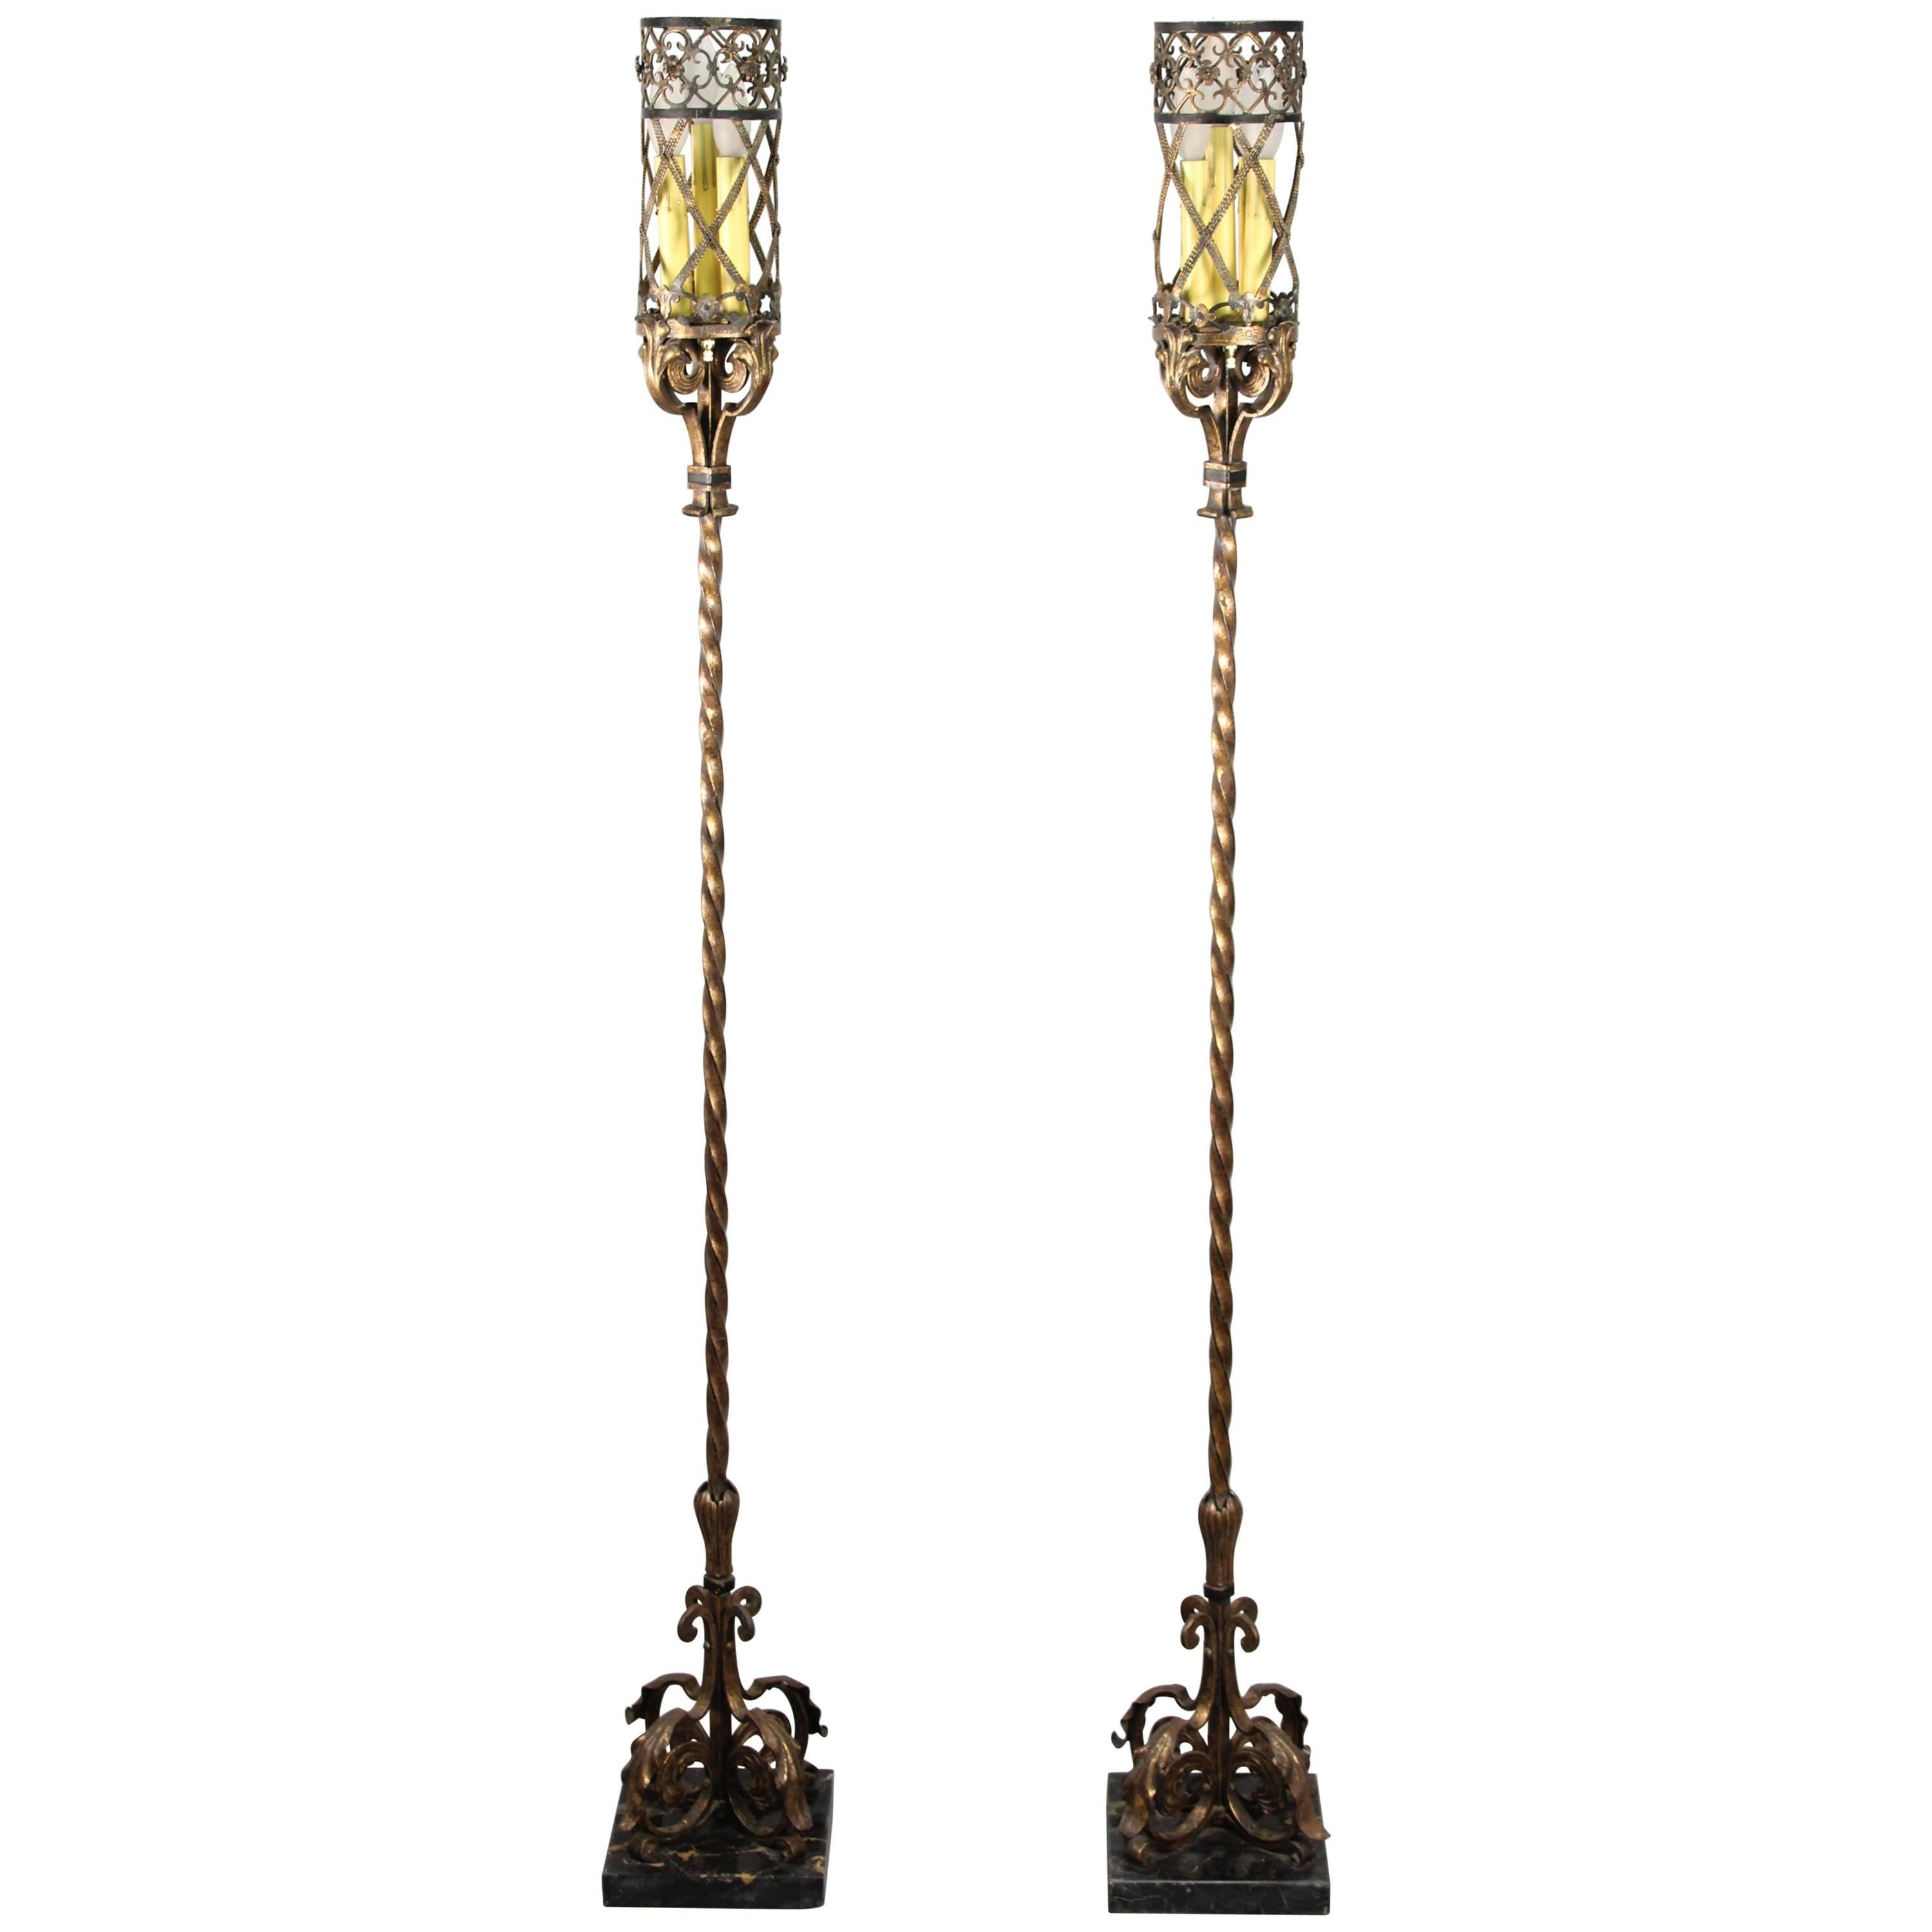 Fantastic Pair of 1920s Torchieres Floor Lamps with Quatrefoil Motif